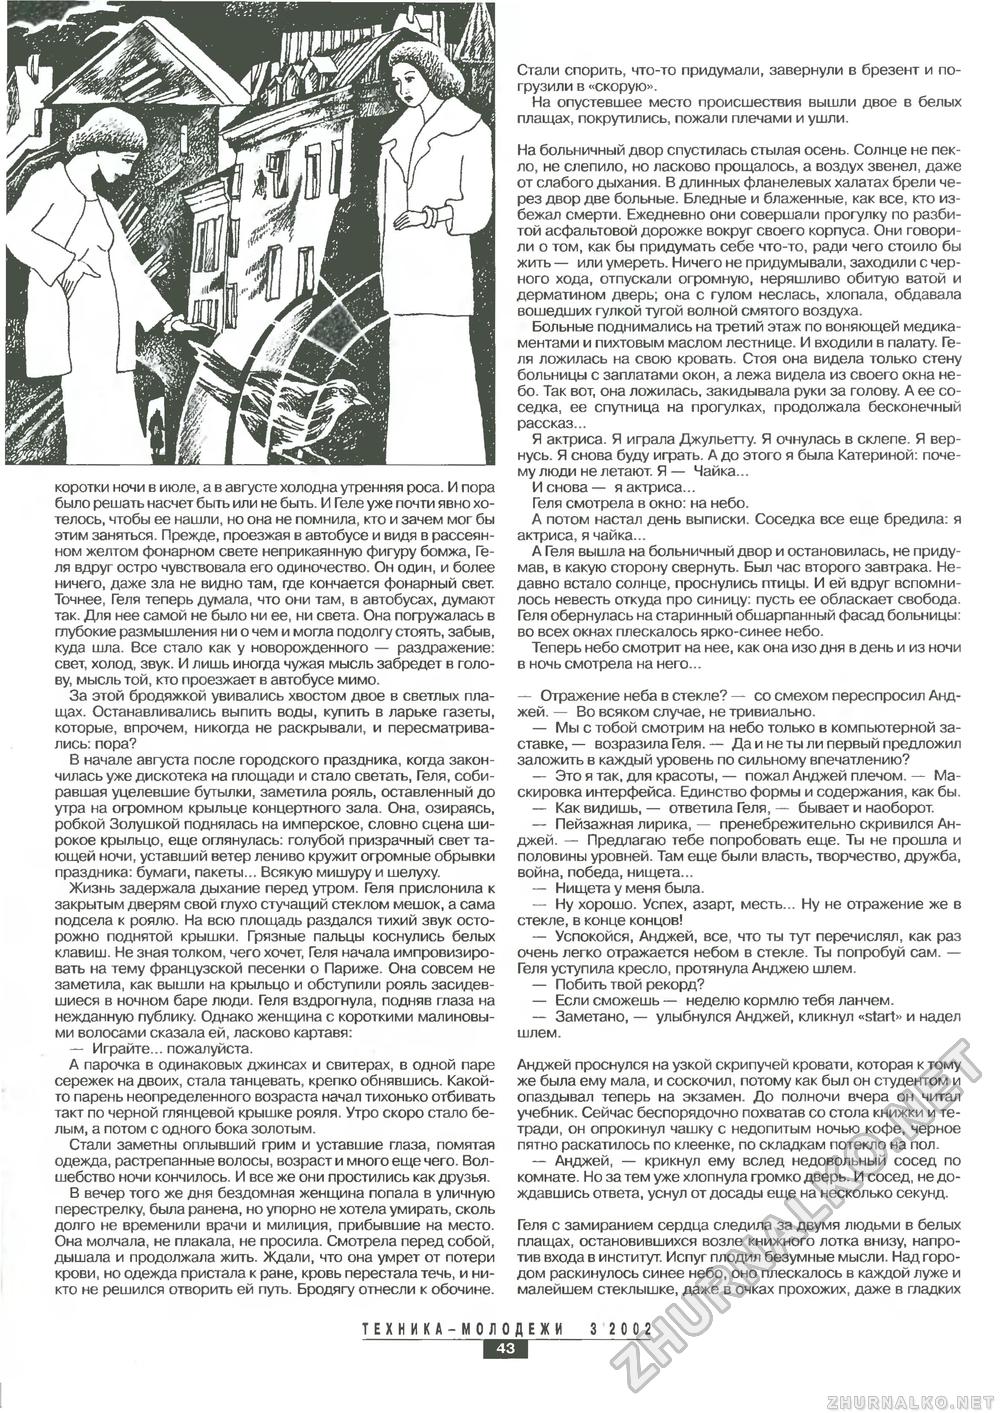 Техника - молодёжи 2002-03, страница 45